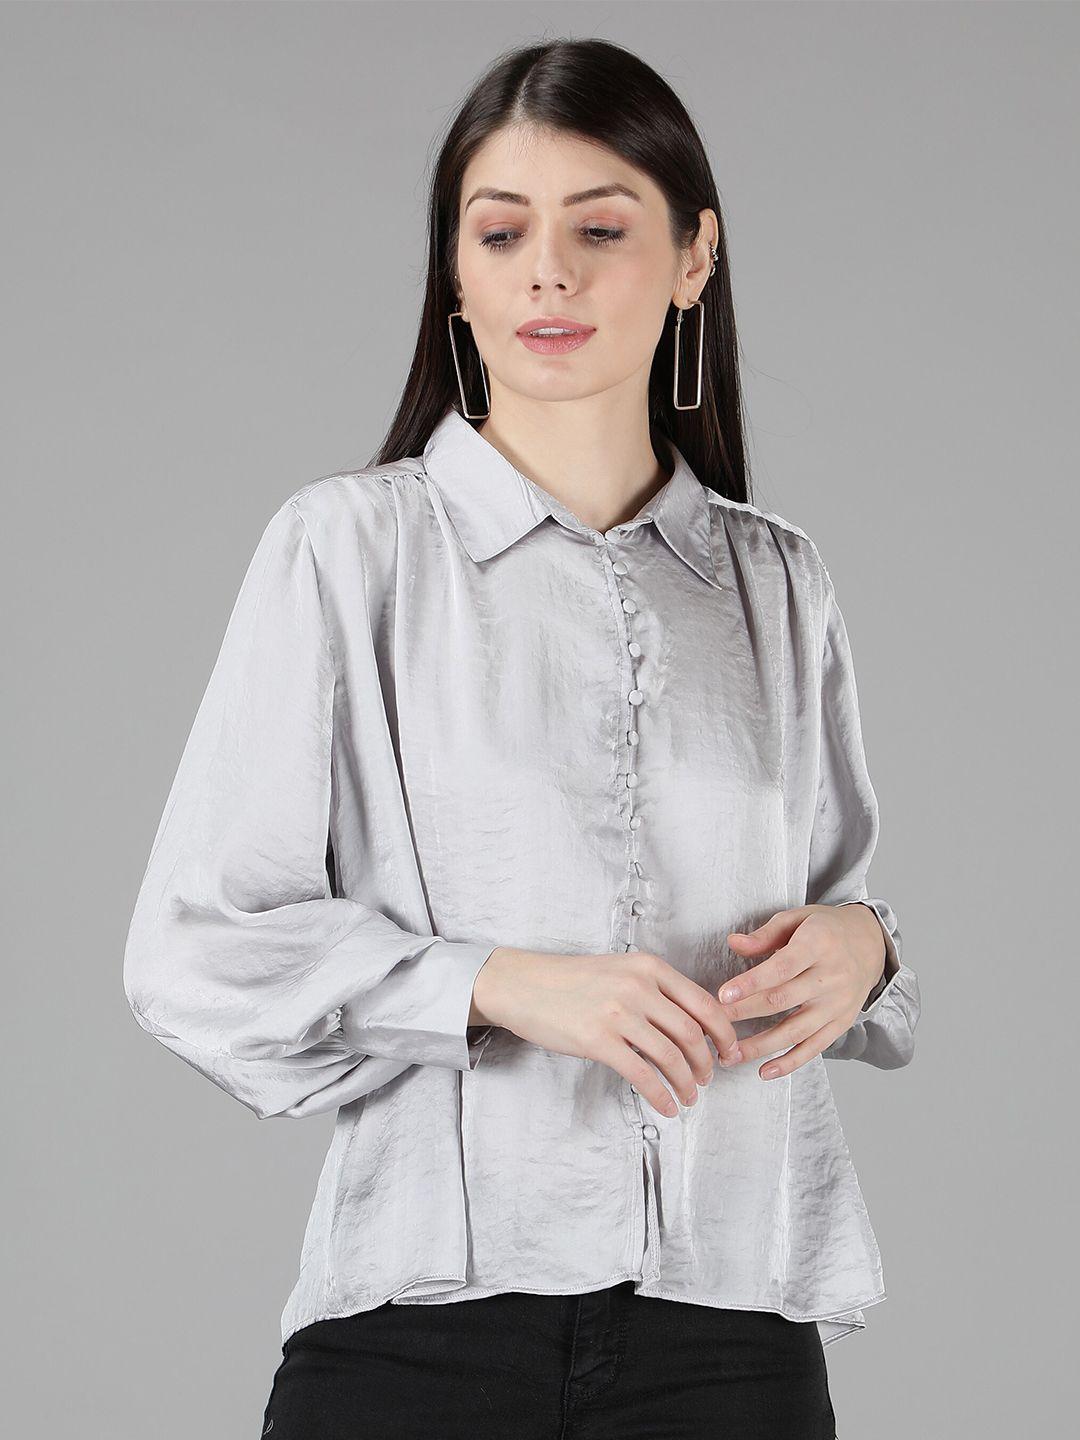 amagyaa women silver-toned satin shirt style top